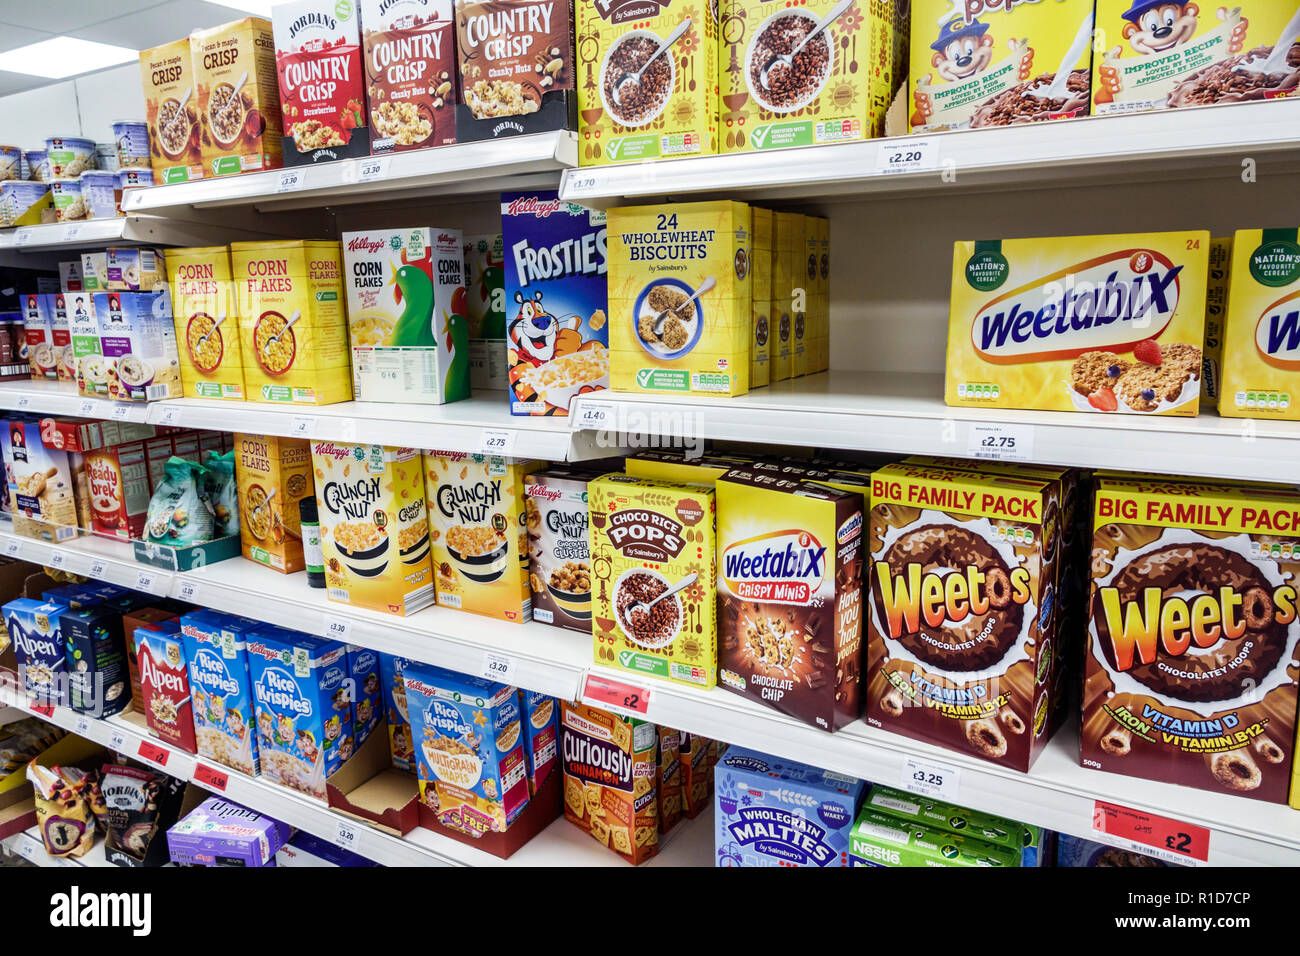 London England,UK,Lambeth South Bank,Sainsbury's grocery supermarket convenience store,breakfast cereal,display,Weetabix,corn flakes,Kellogg’s,boxes,U Stock Photo